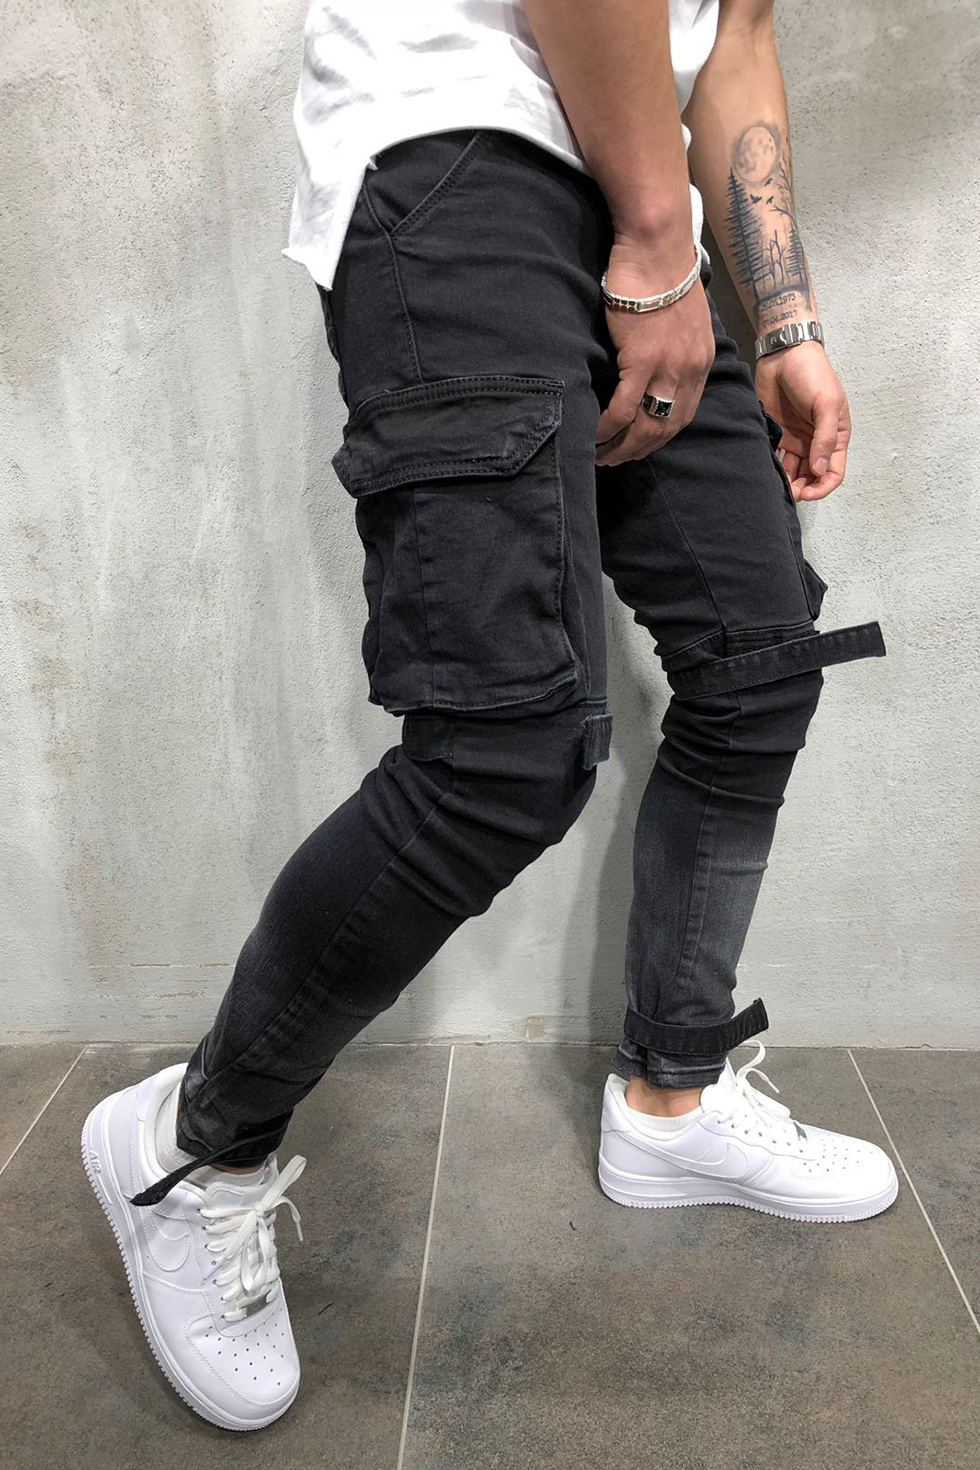 black cargo jeans mens